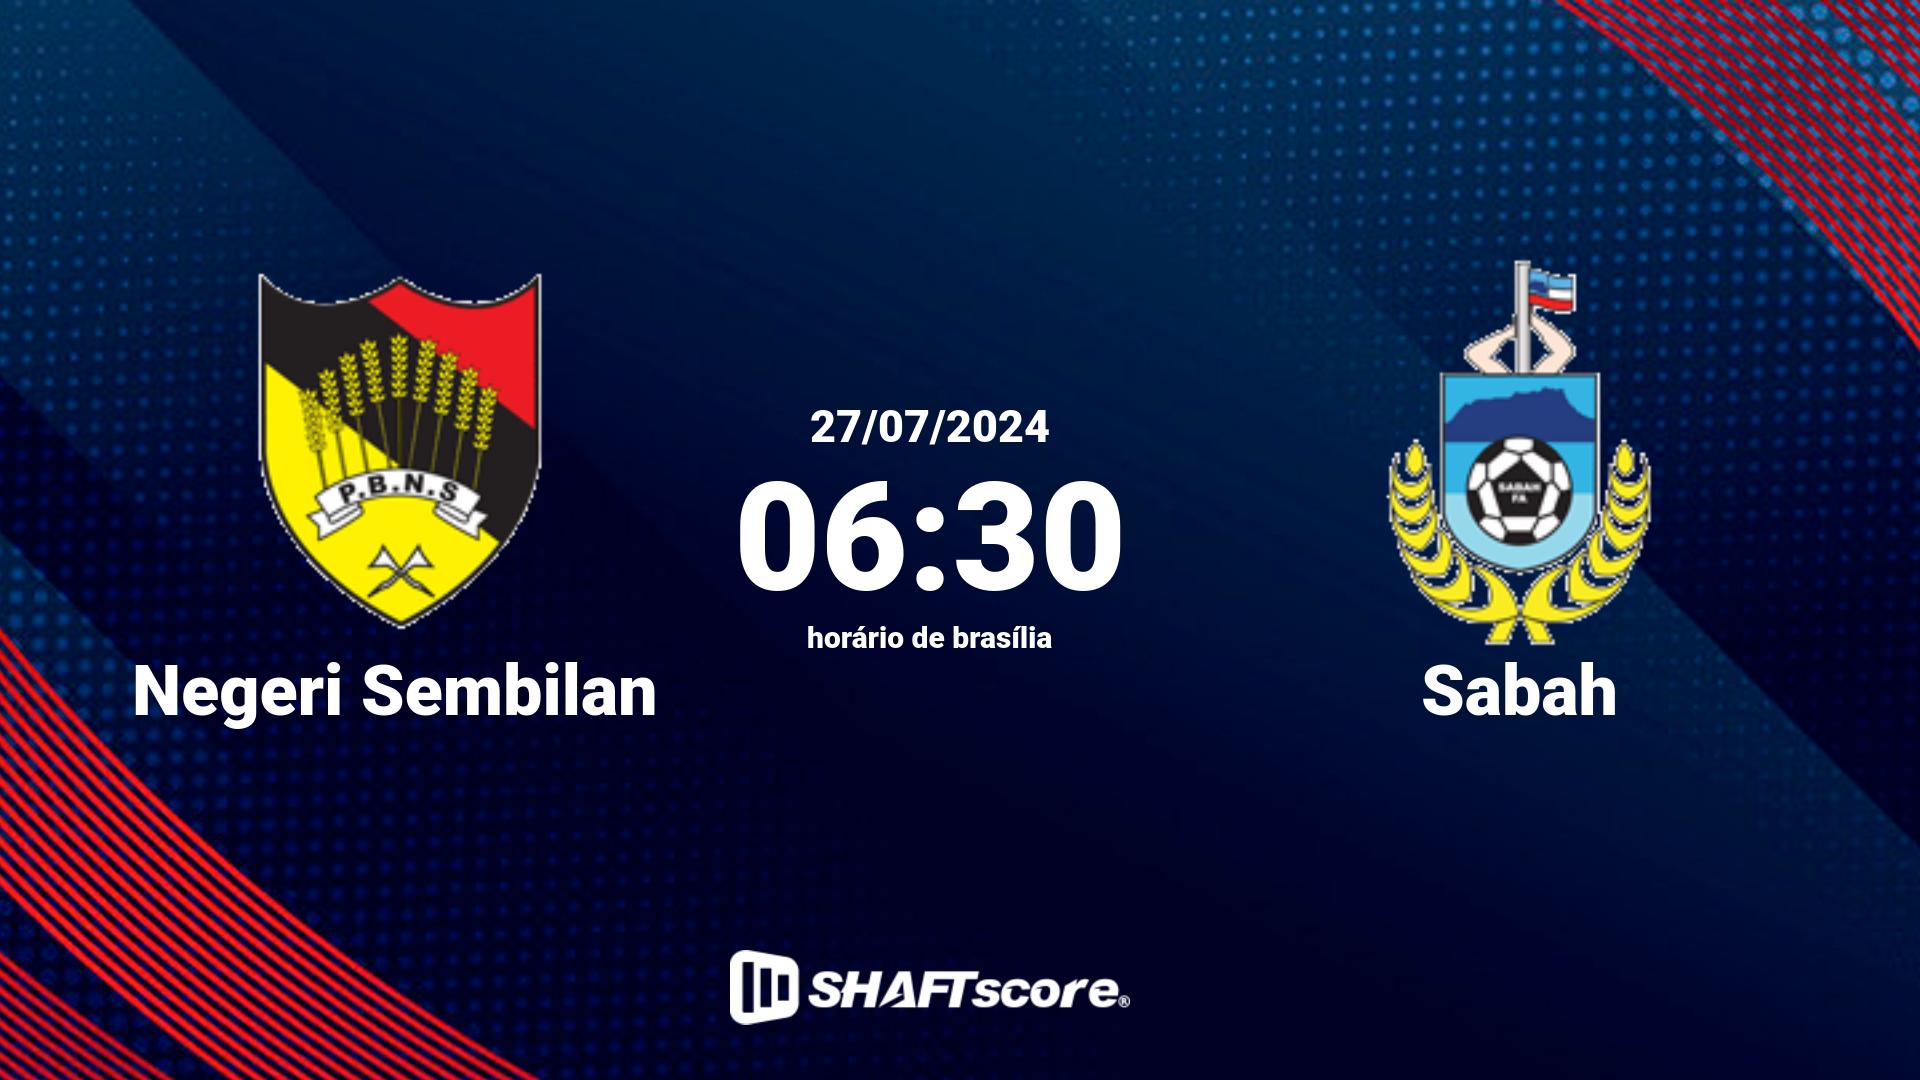 Estatísticas do jogo Negeri Sembilan vs Sabah 27.07 06:30